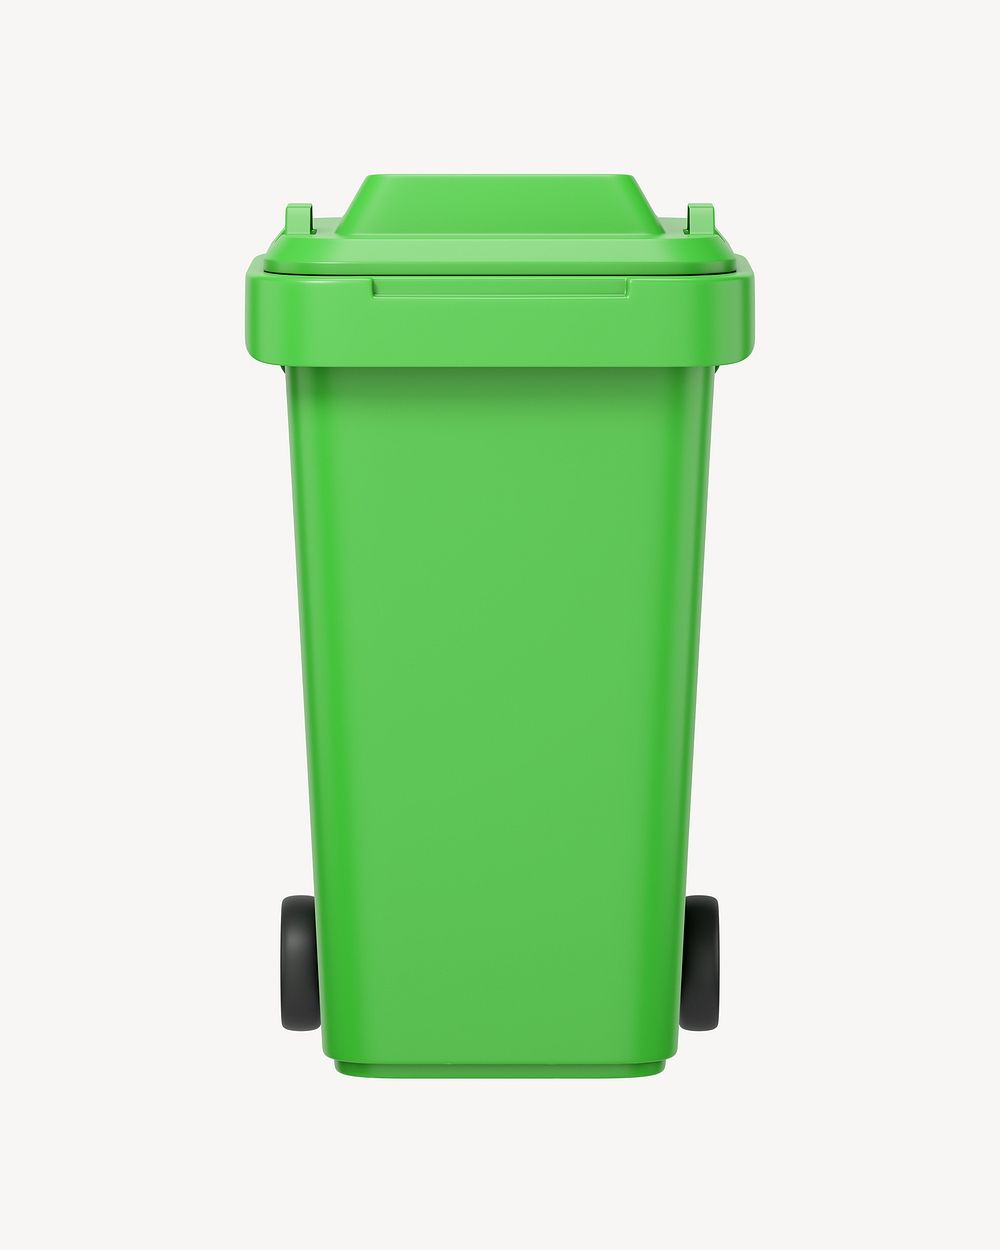 3D green bin, element illustration